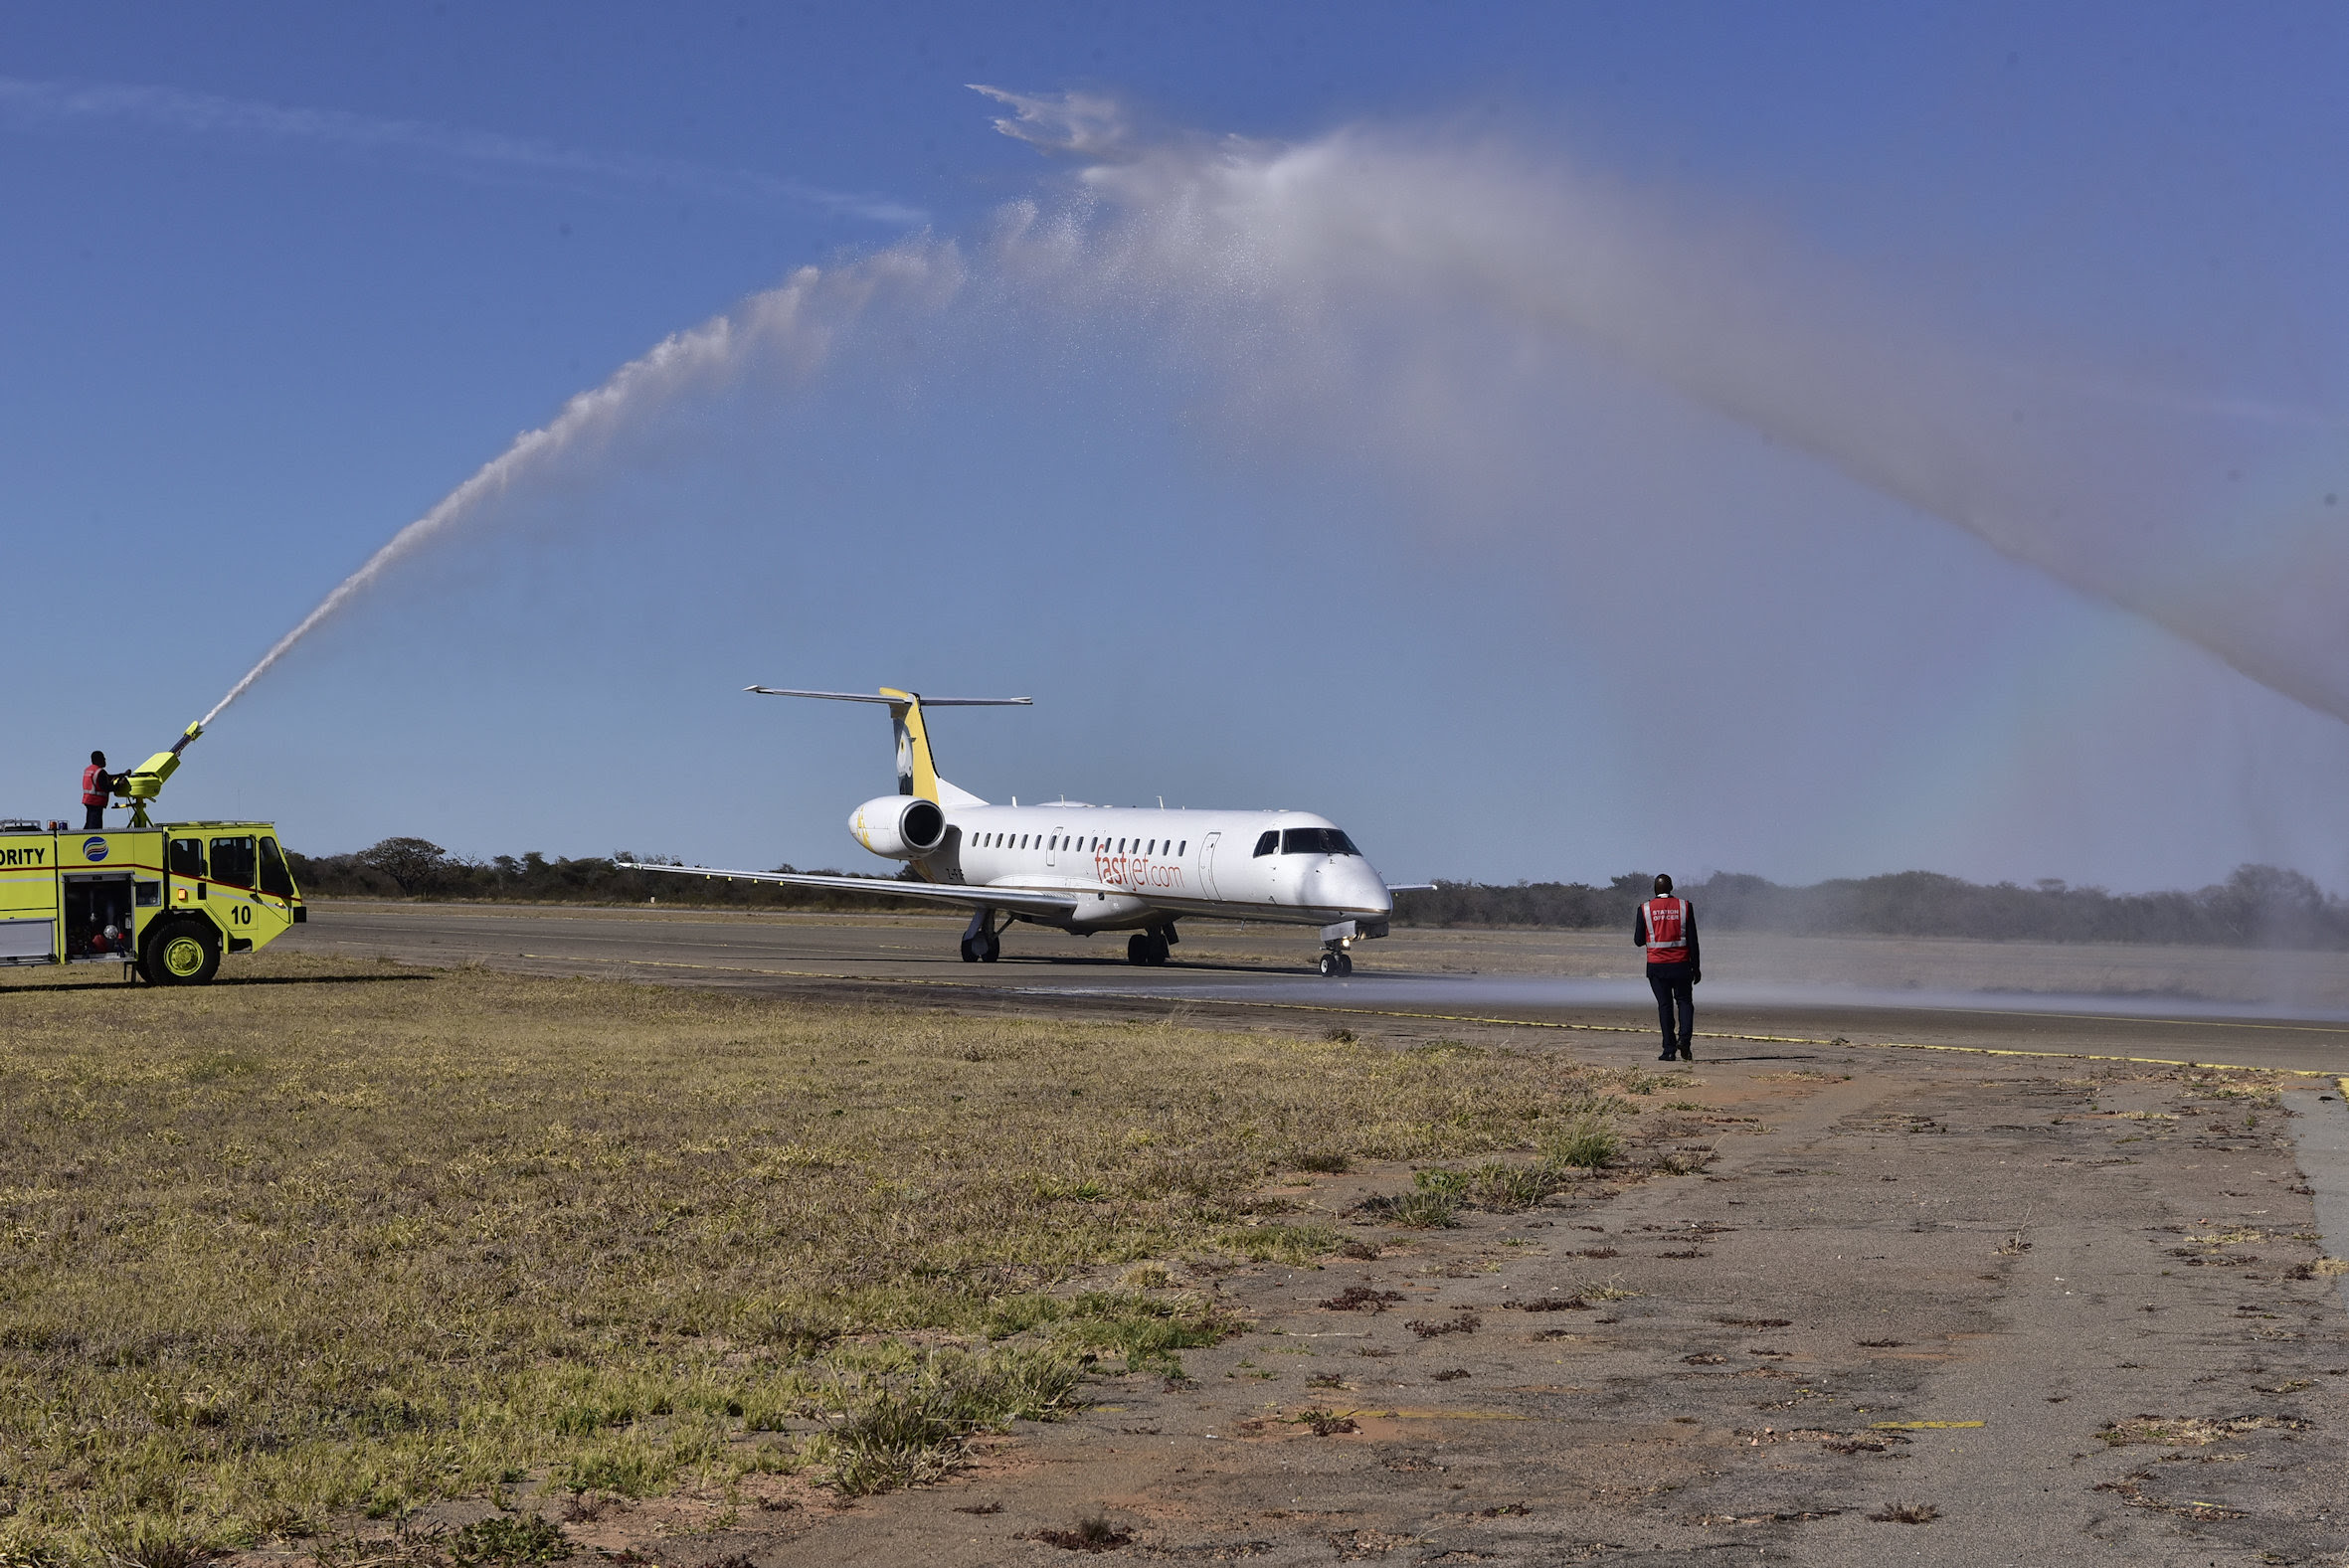 fastjet pledges to help revive Bulawayo